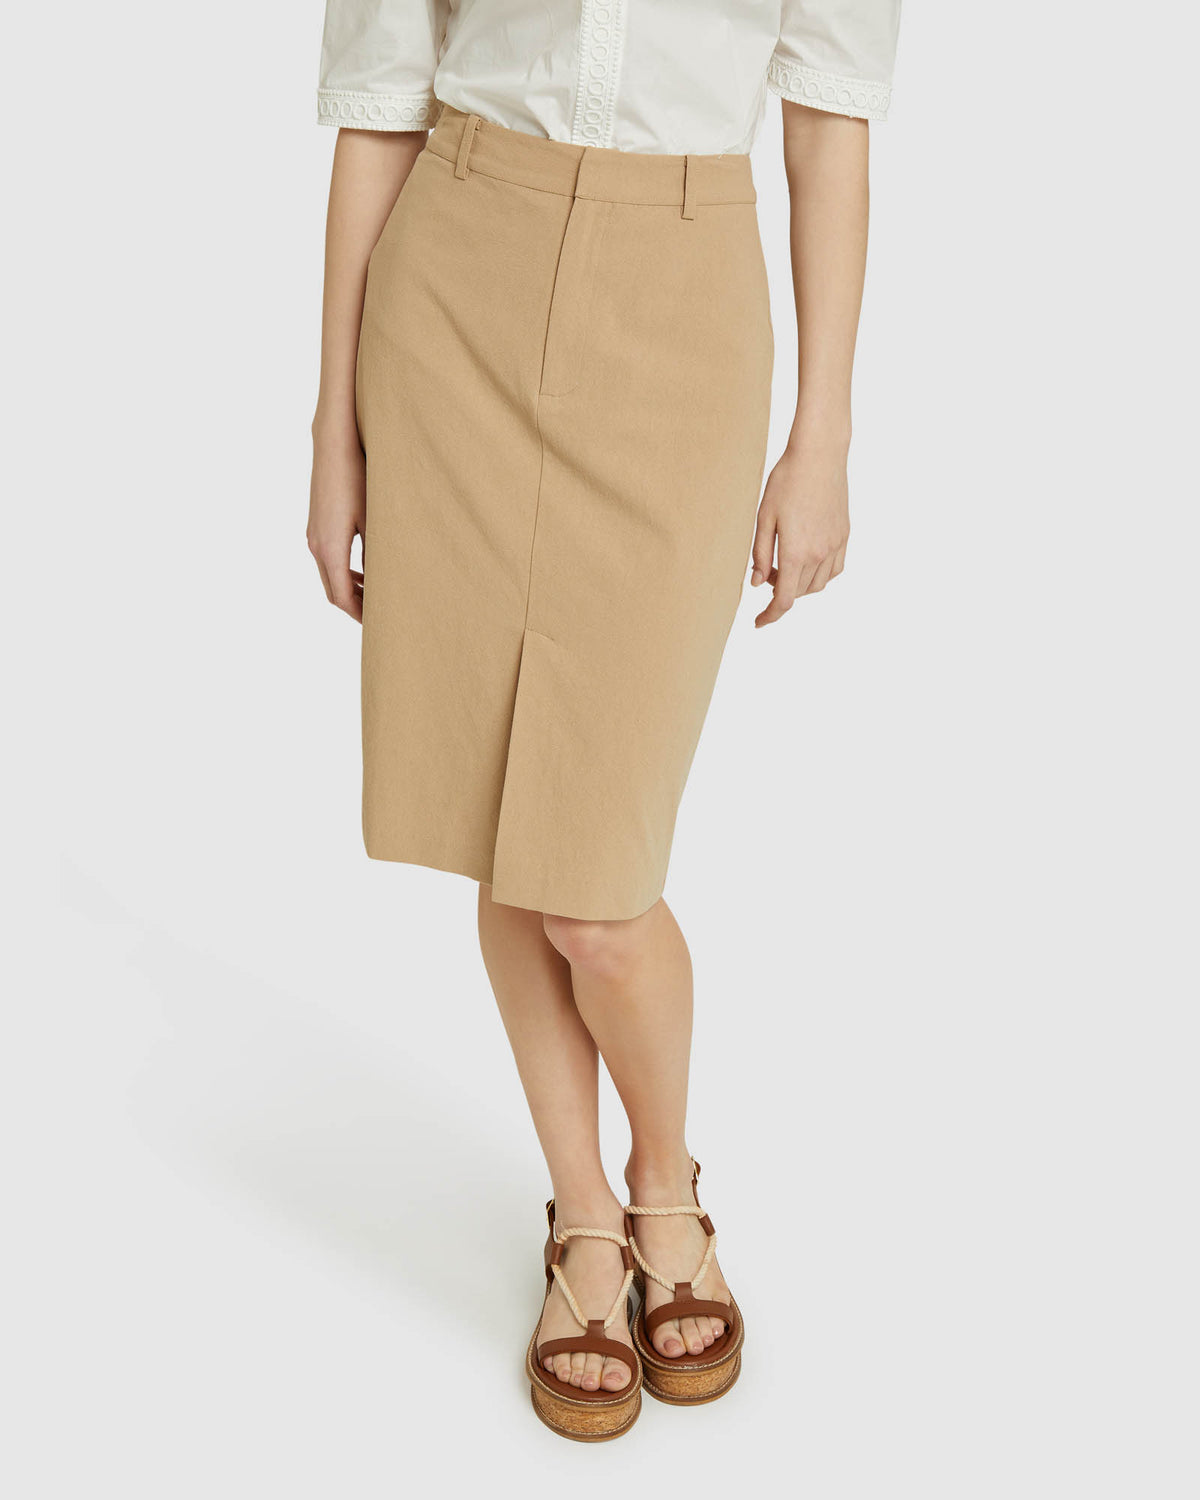 tan skirt cotton